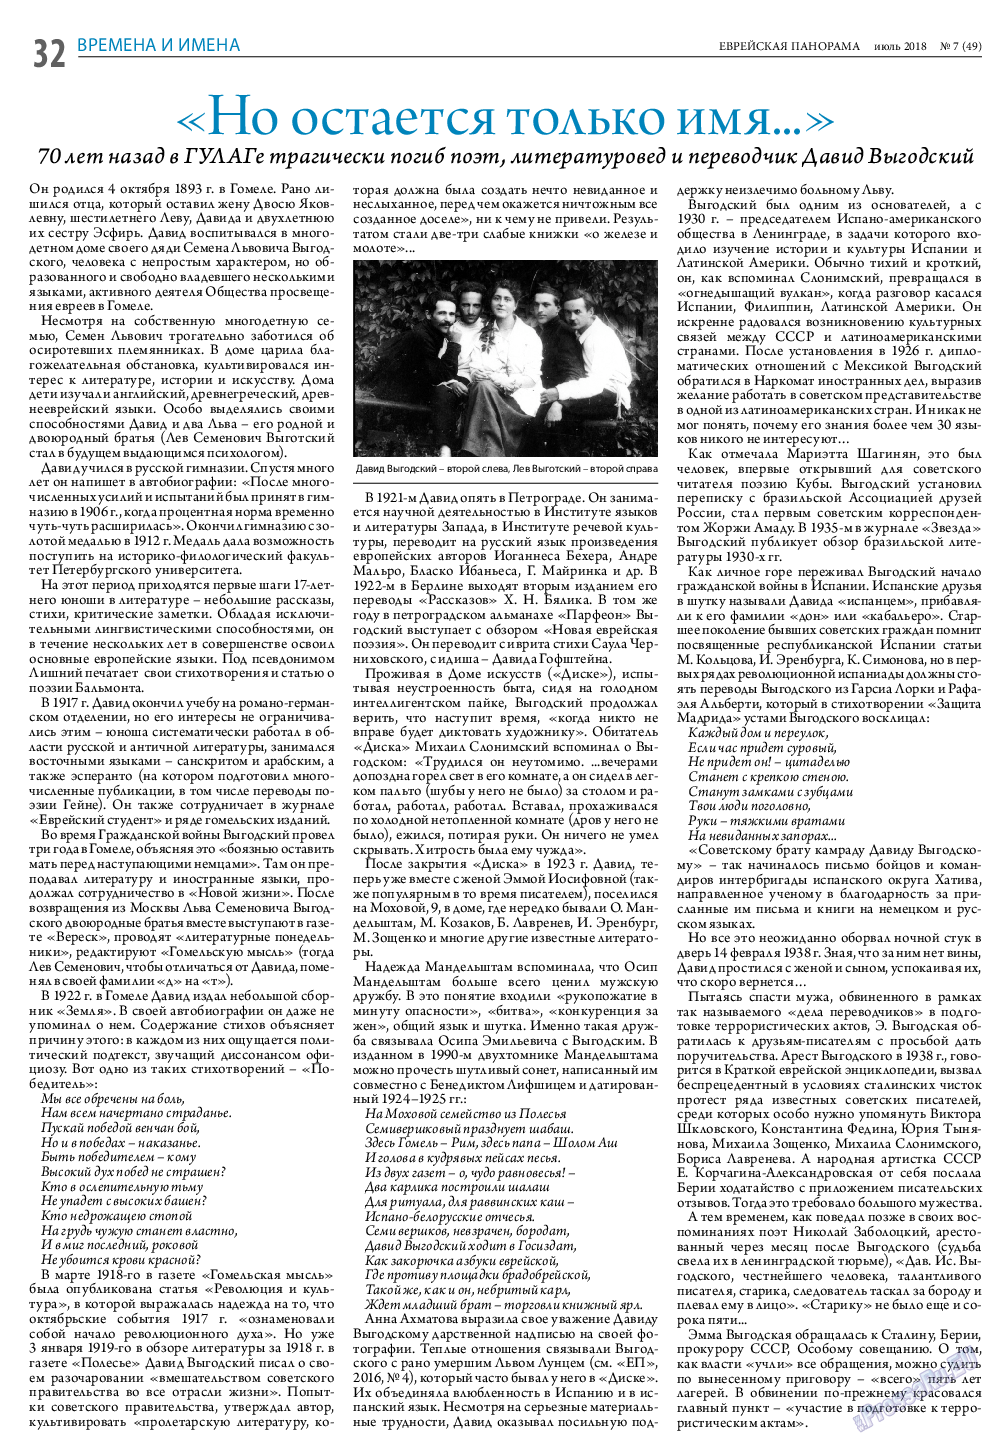 Еврейская панорама, газета. 2018 №7 стр.32